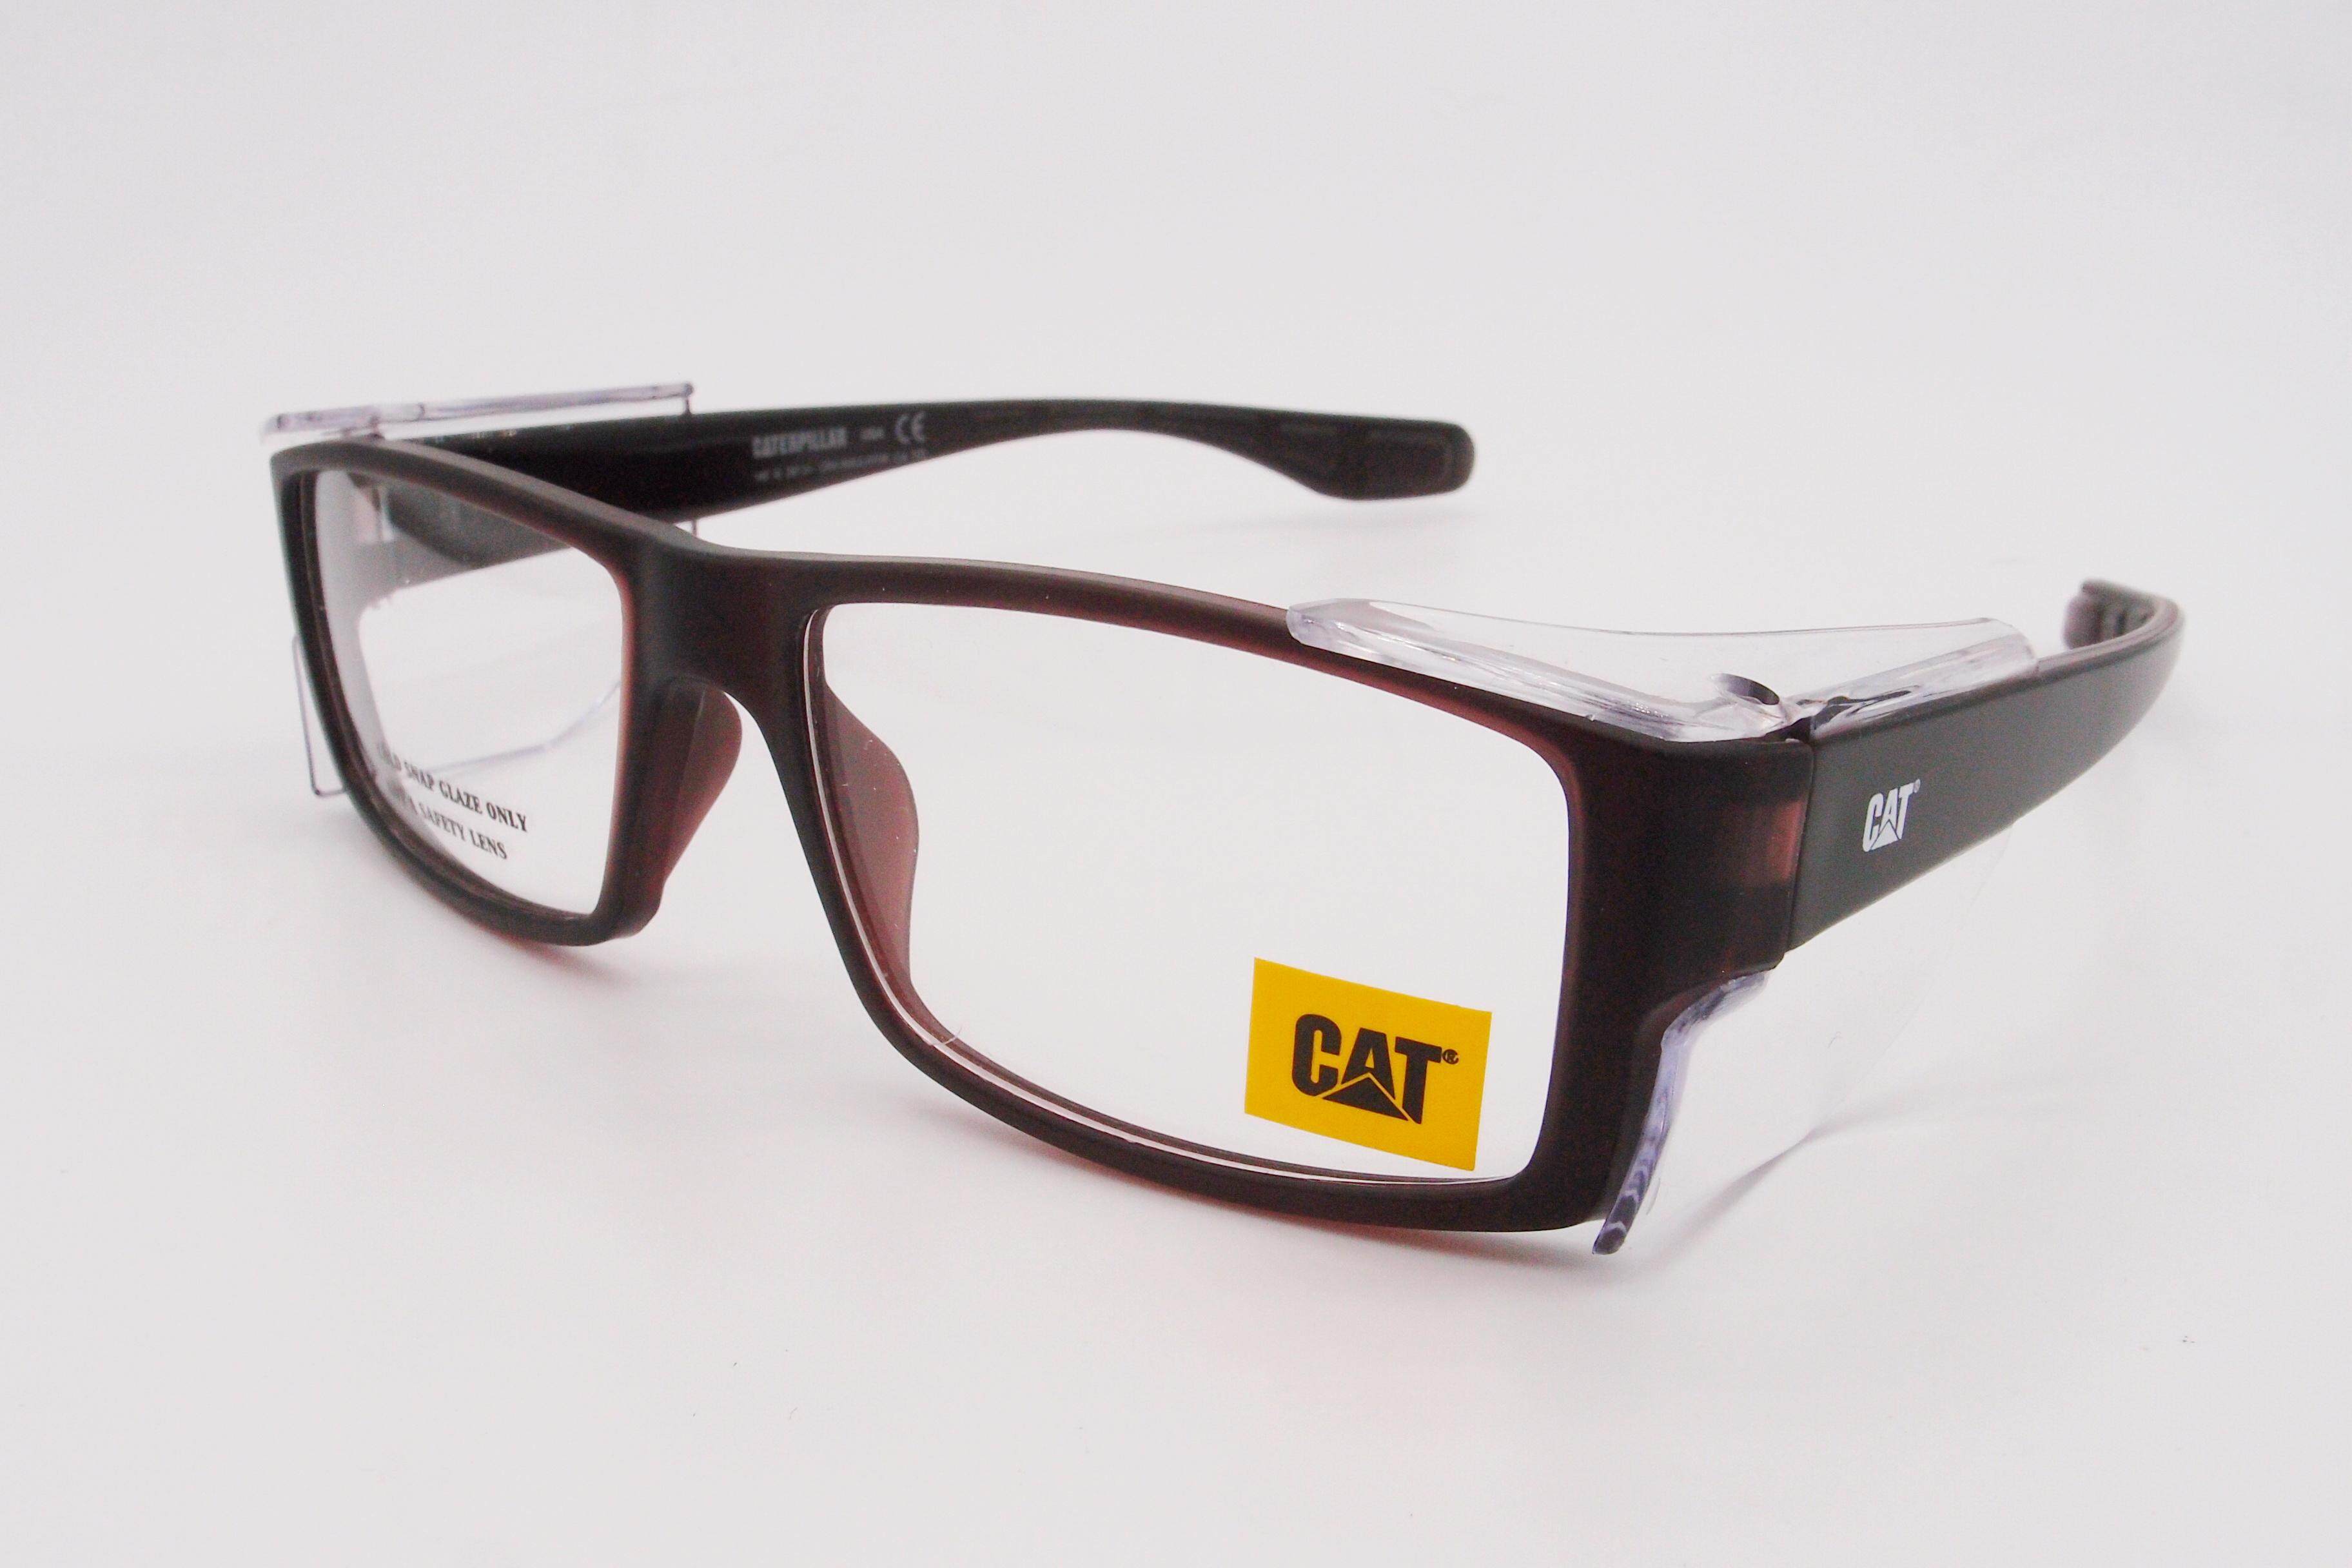 CAT Caterpillar Safety Glasses Work Eyewear Sunglasses | eBay